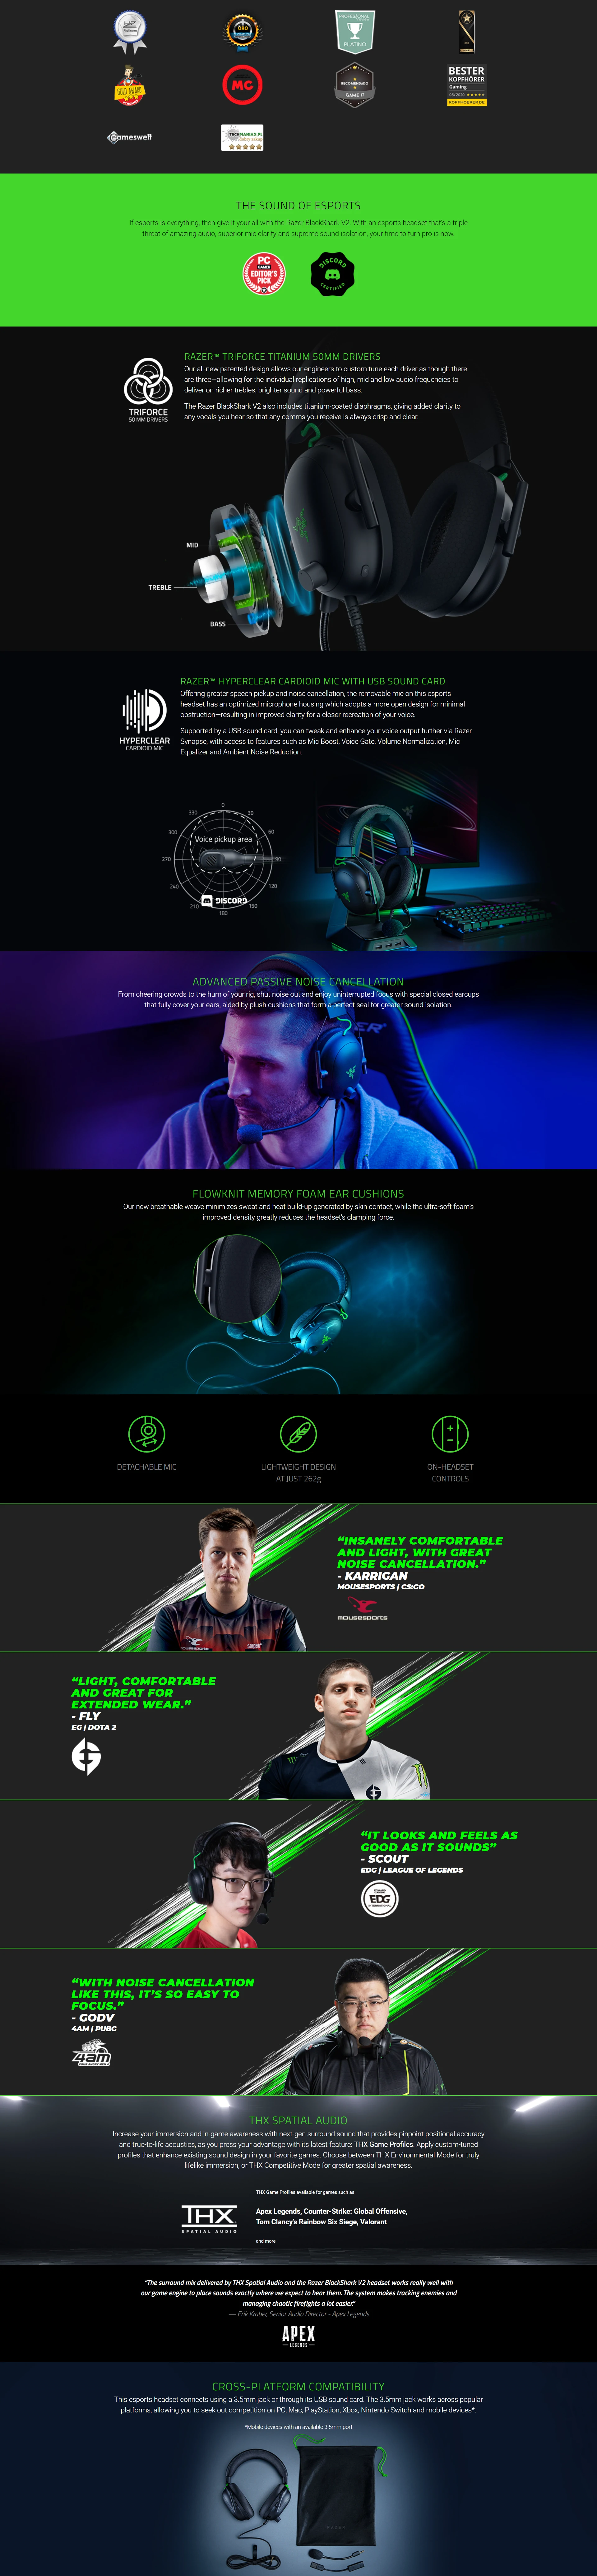 Overview - Razer BlackShark V2 Multi-Platform Wired E-Sports Headset